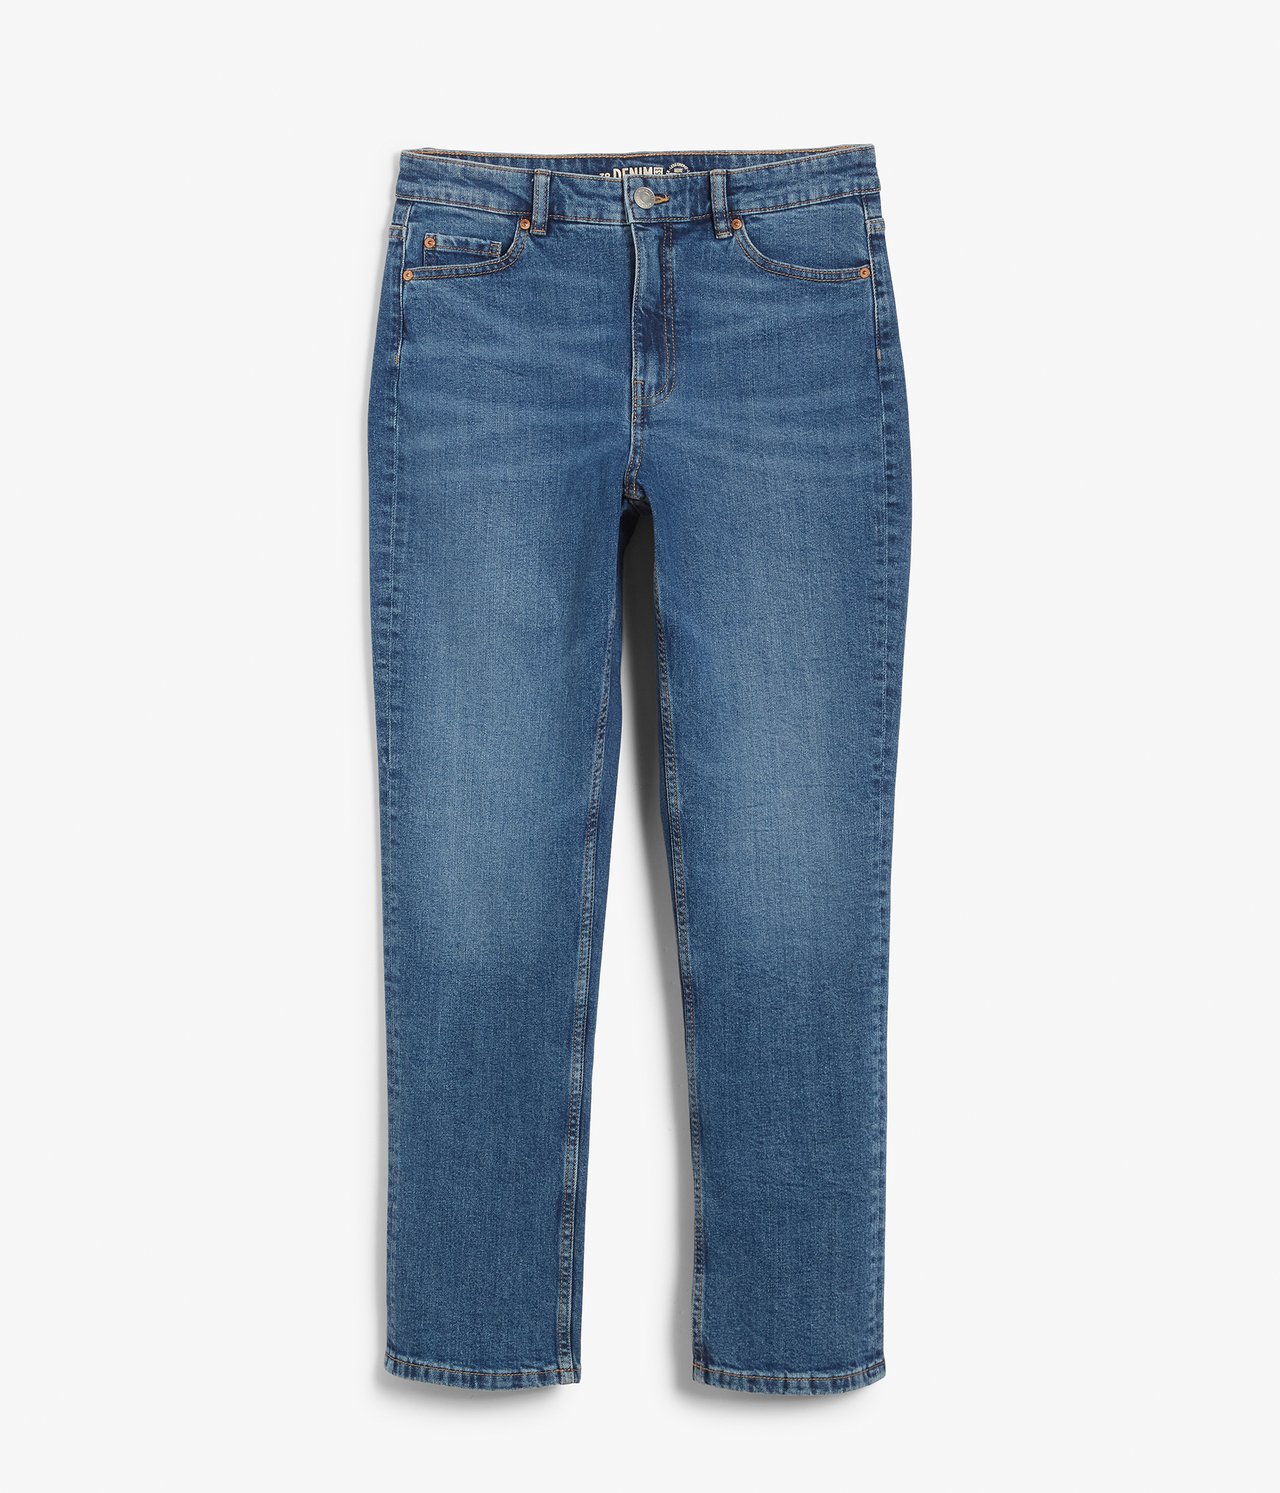 Jeans high waist tapered - Denim - 9